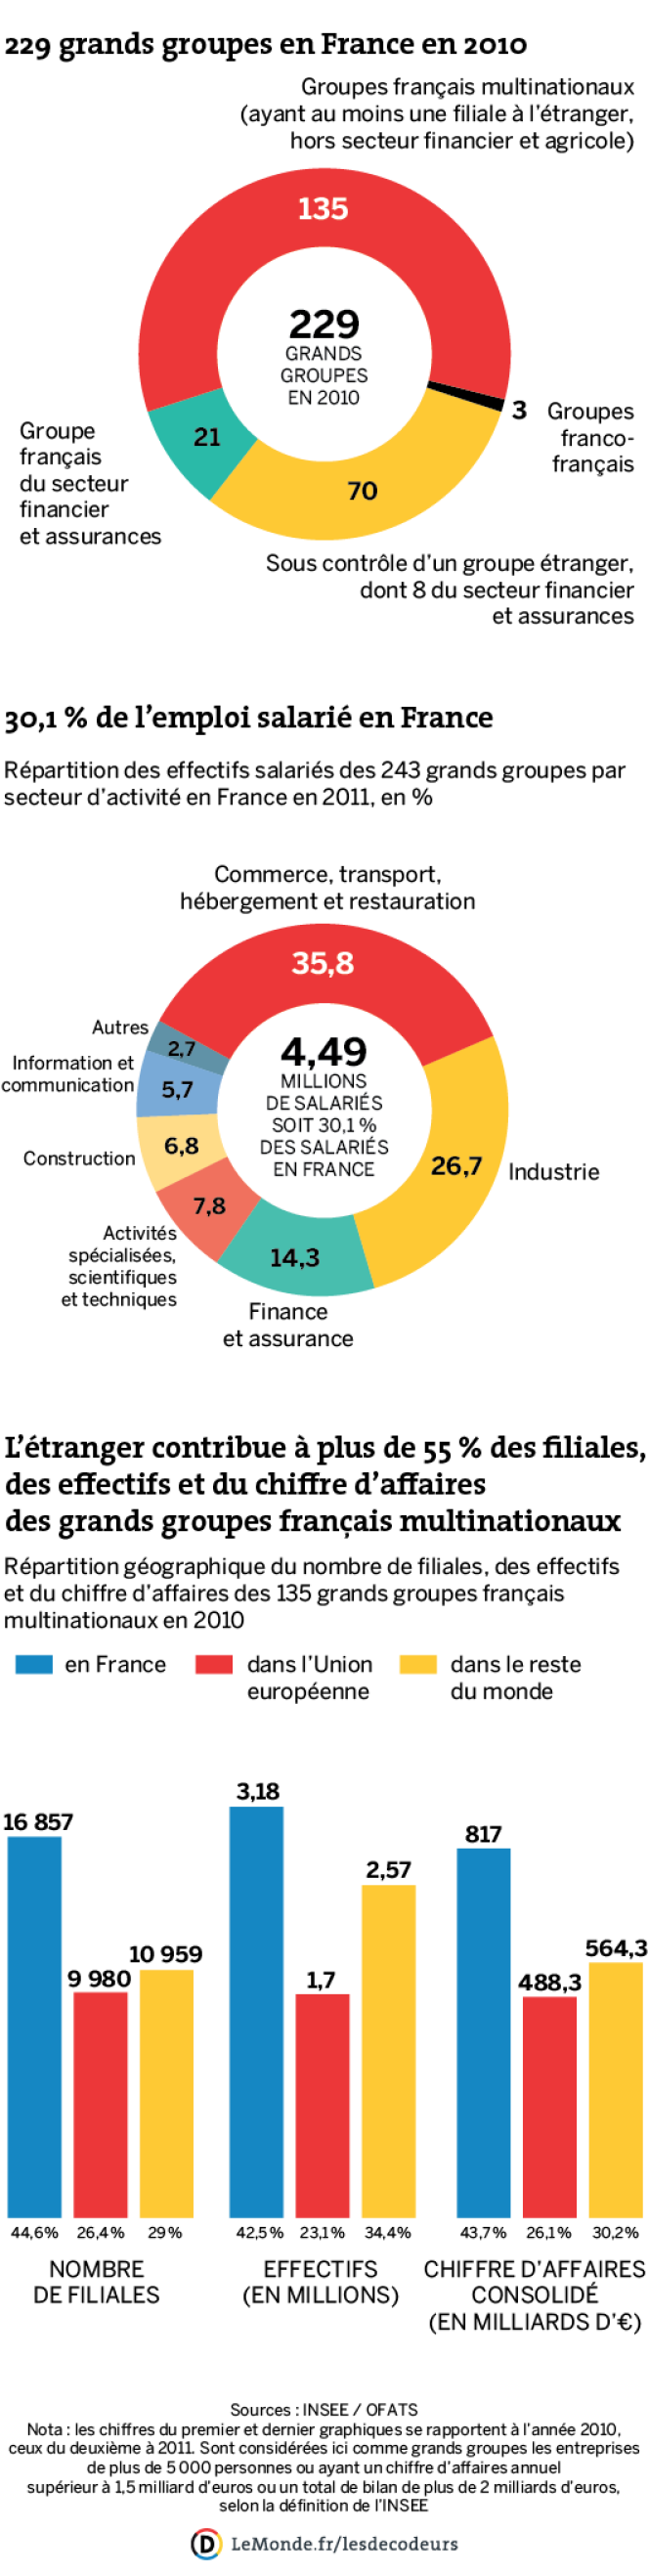 Panorama des grands groupes en France